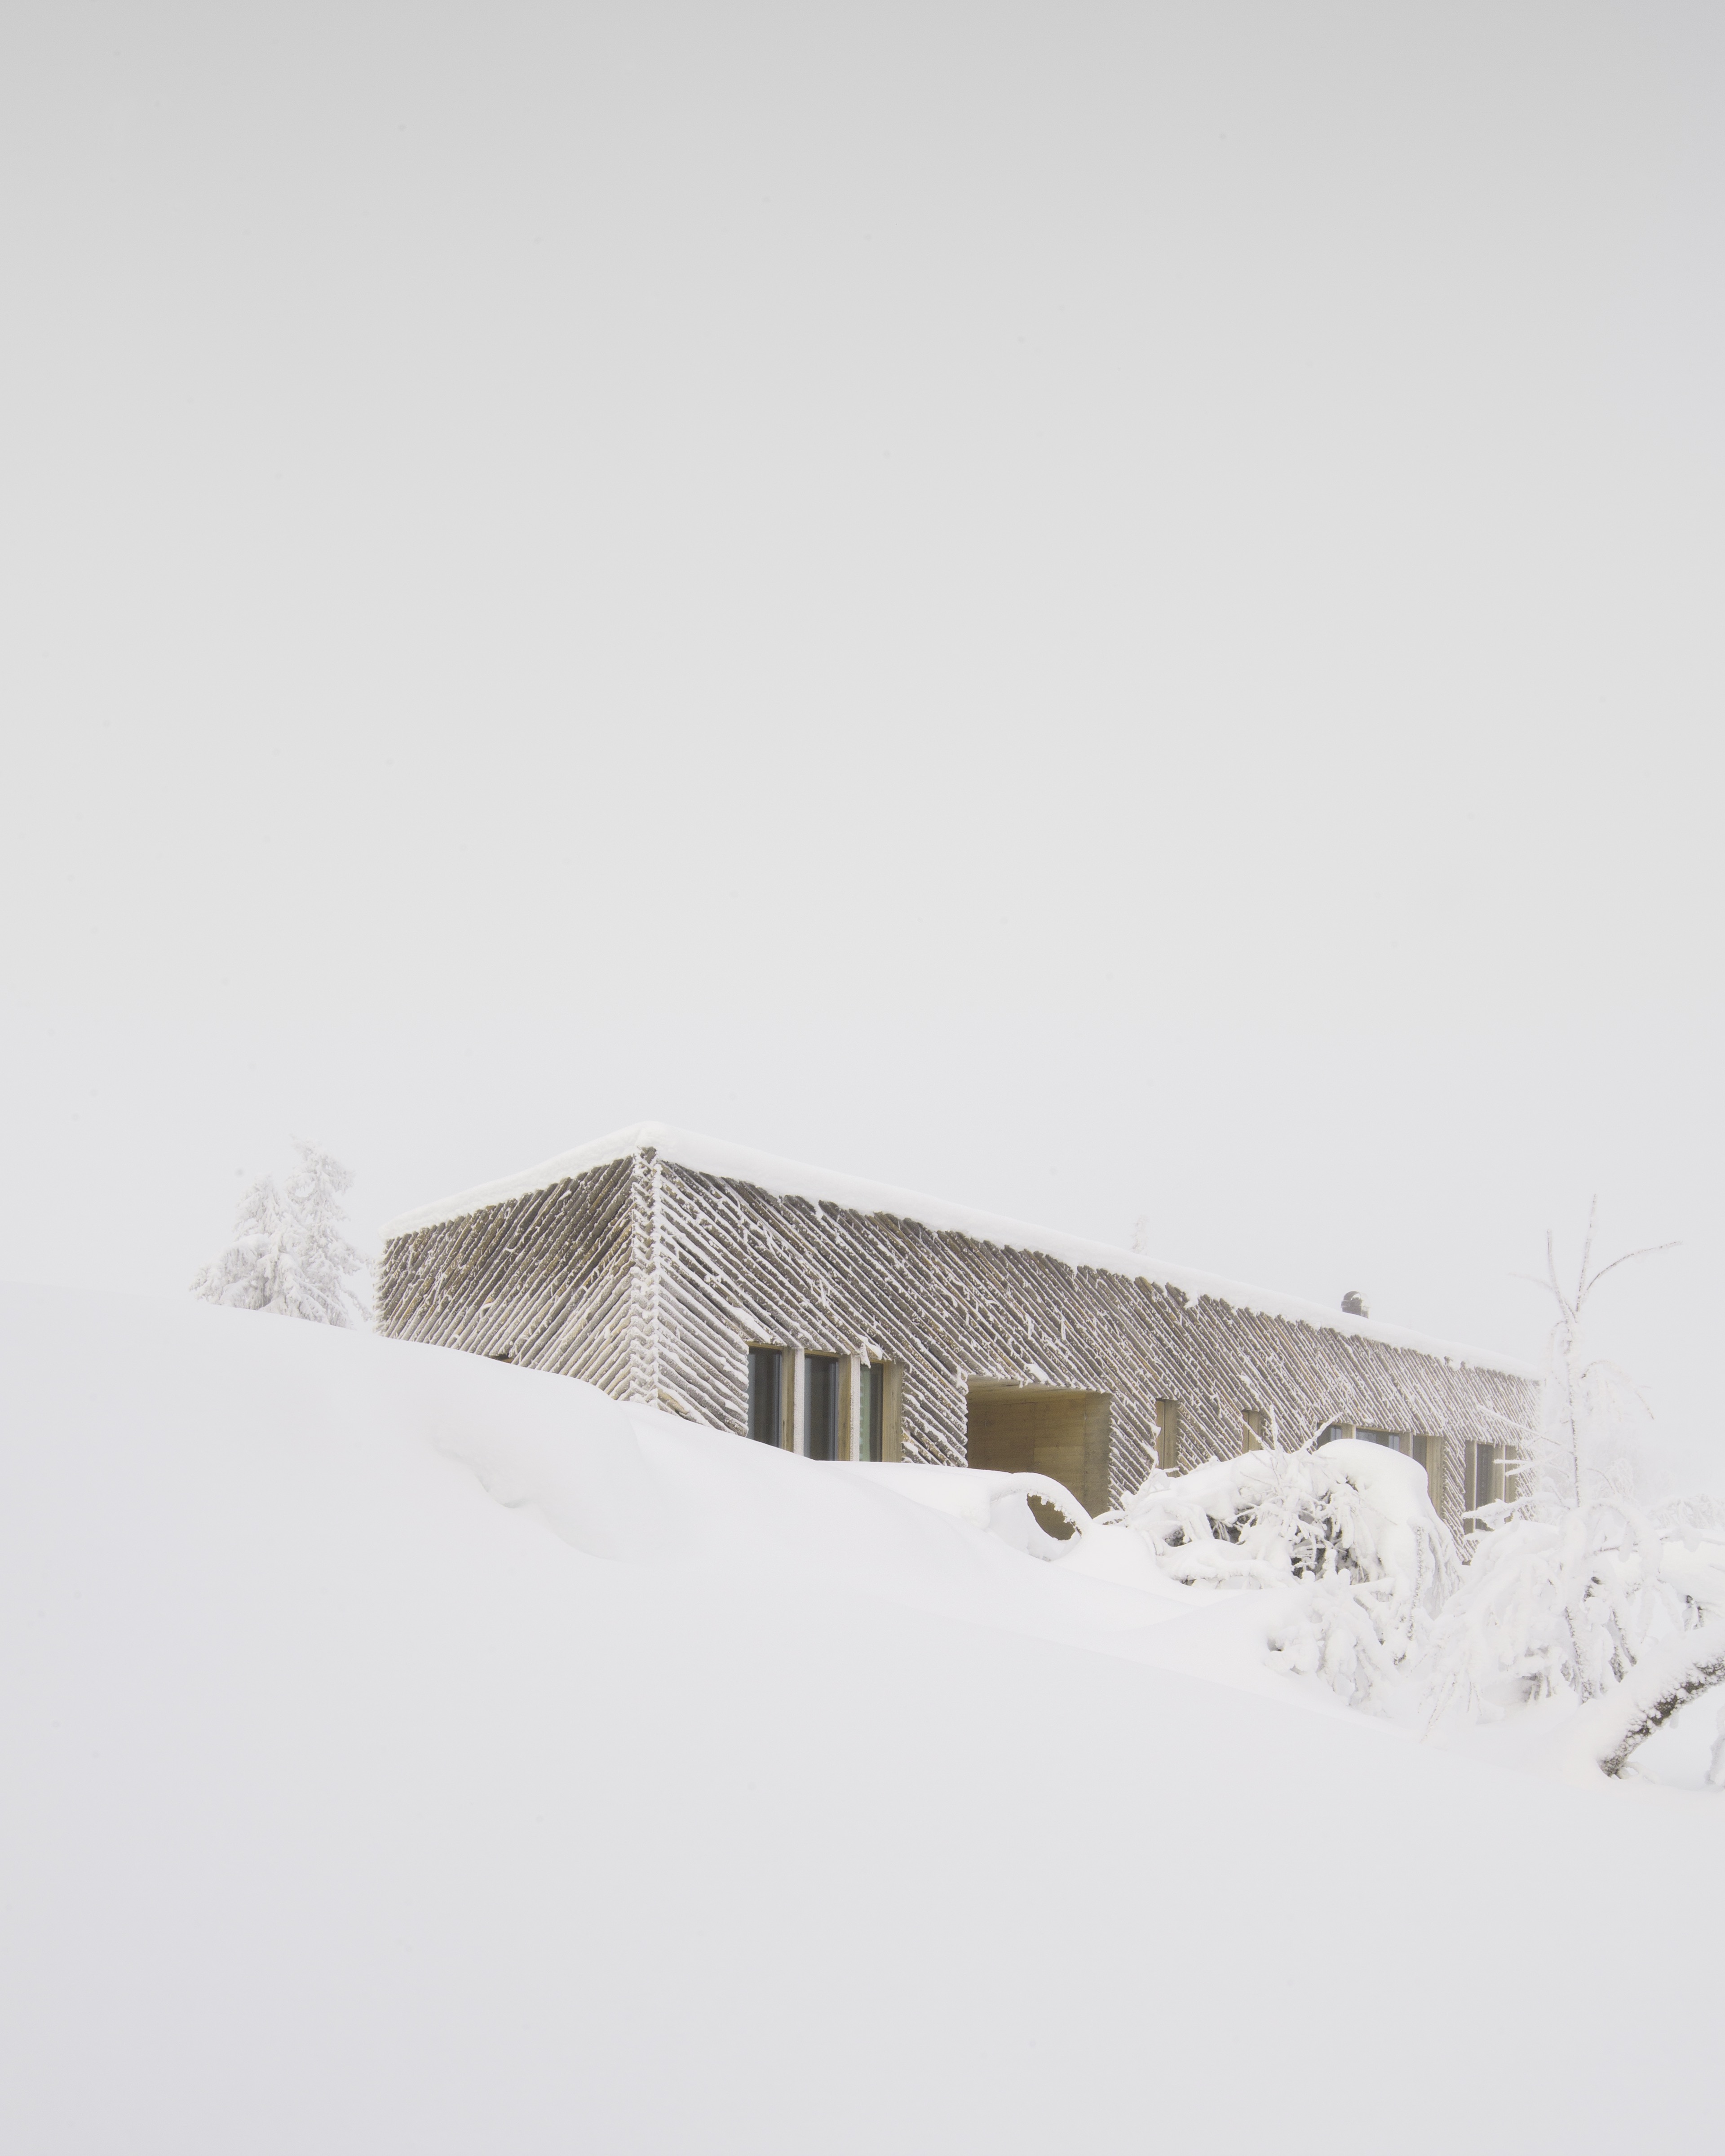 Mork-Ulnes Architects - Skigard Hytte - PH W_112 - photo by Juan Benavides